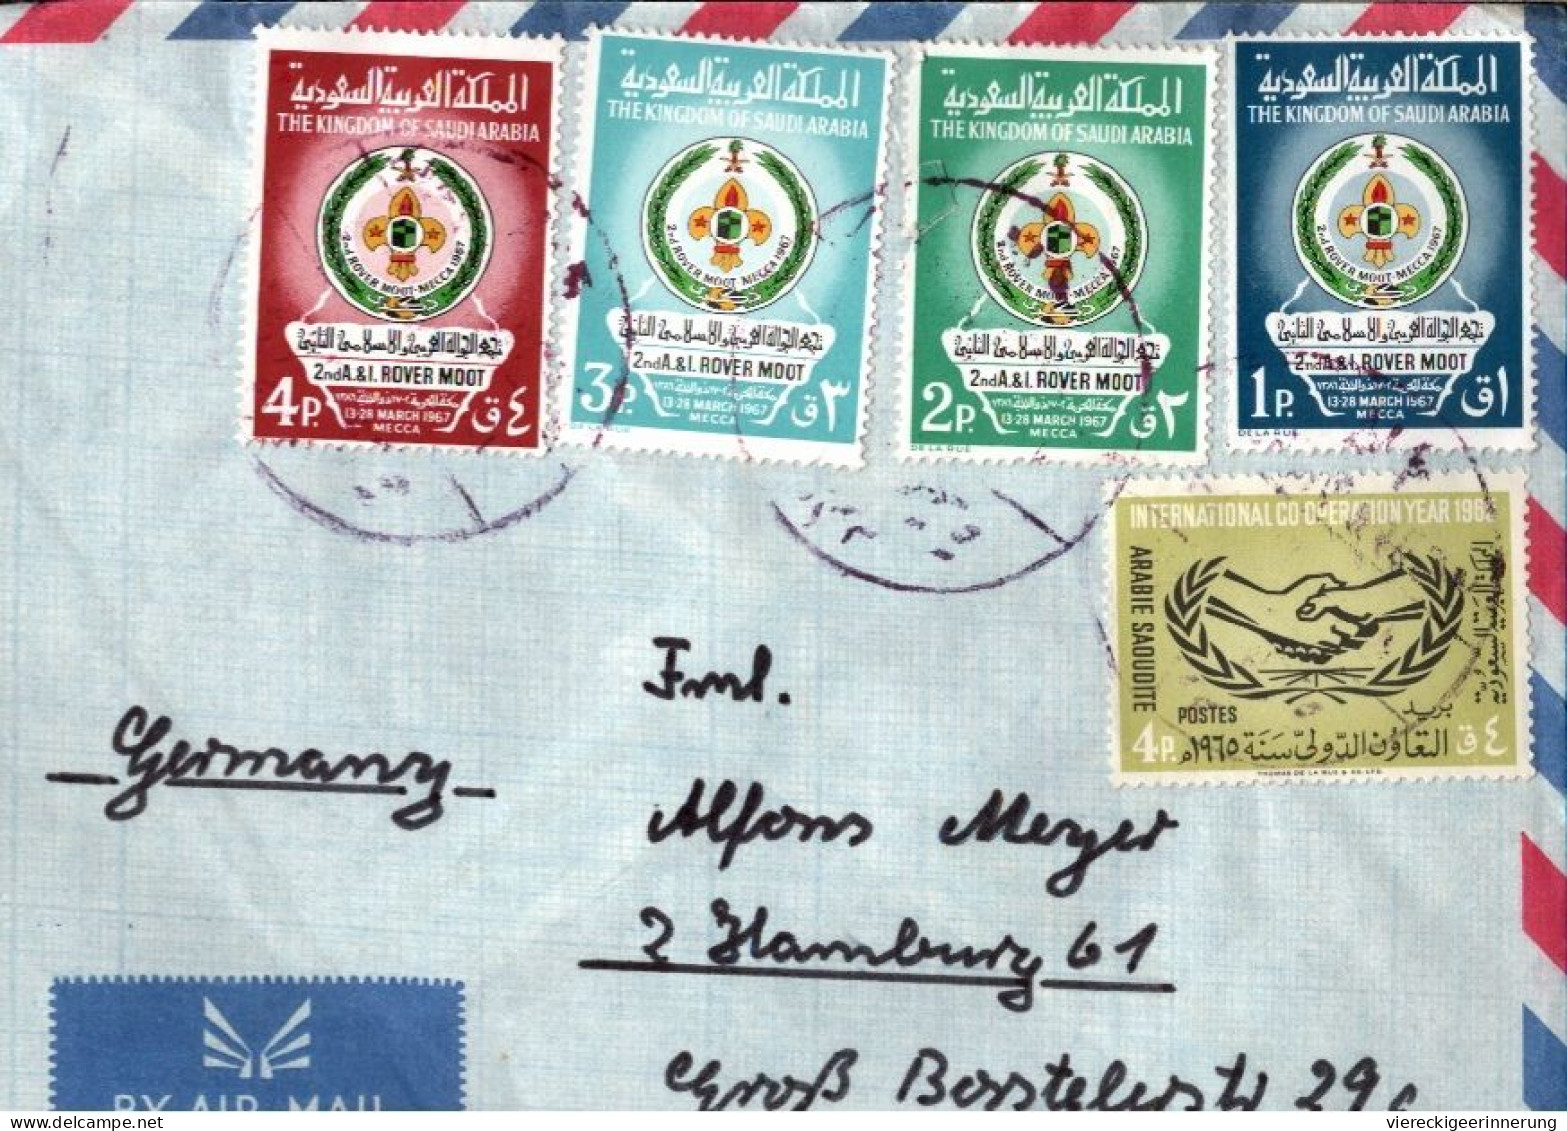 ! Luftpostbrief, Airmail Cover, 1967 Aus Jeddah, Saudi Arabia, Boyscout Stamps - Arabia Saudita